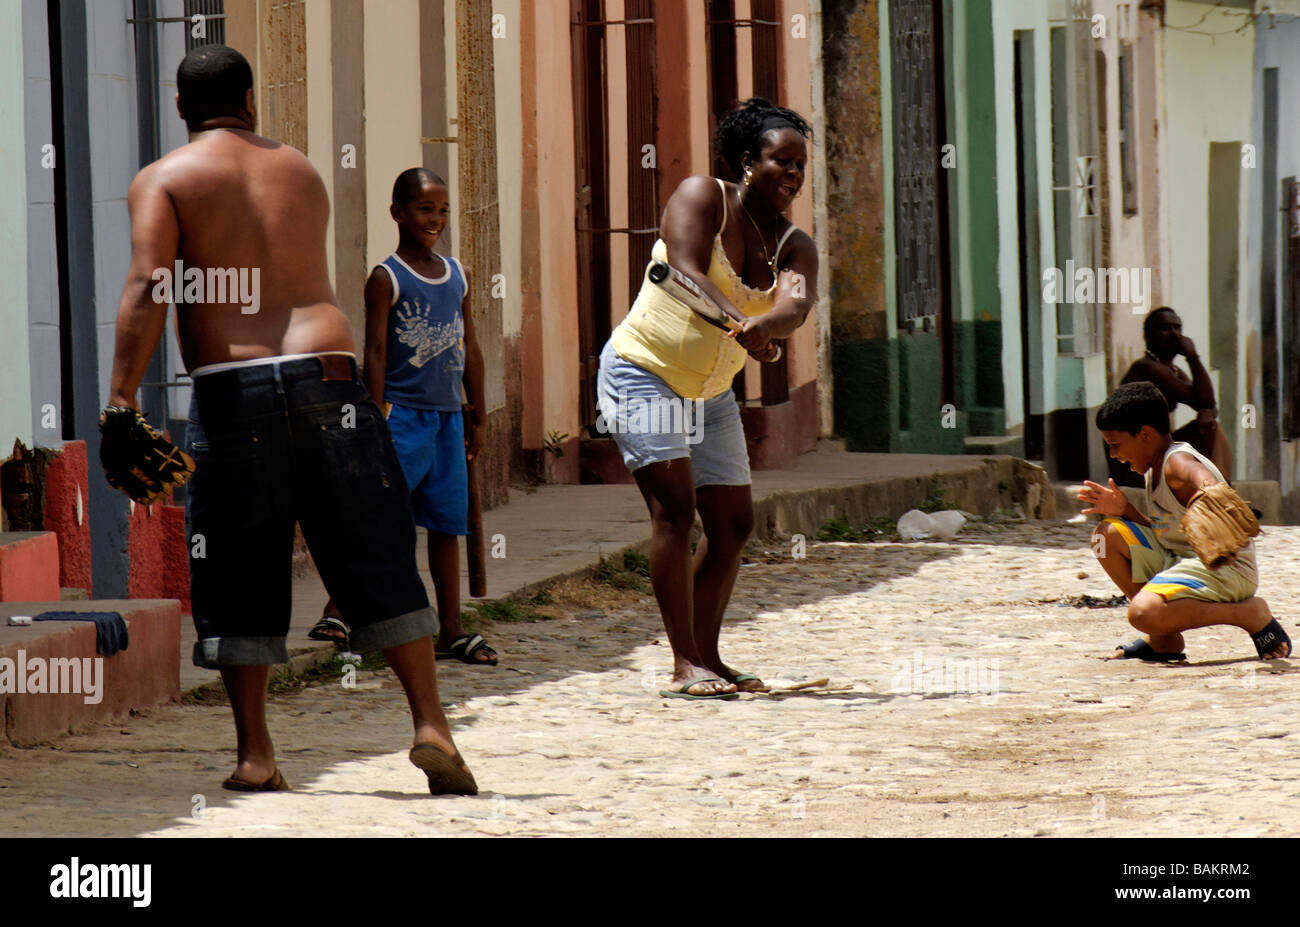 Baseball in the street, Trinidad, Cuba Stock Photo